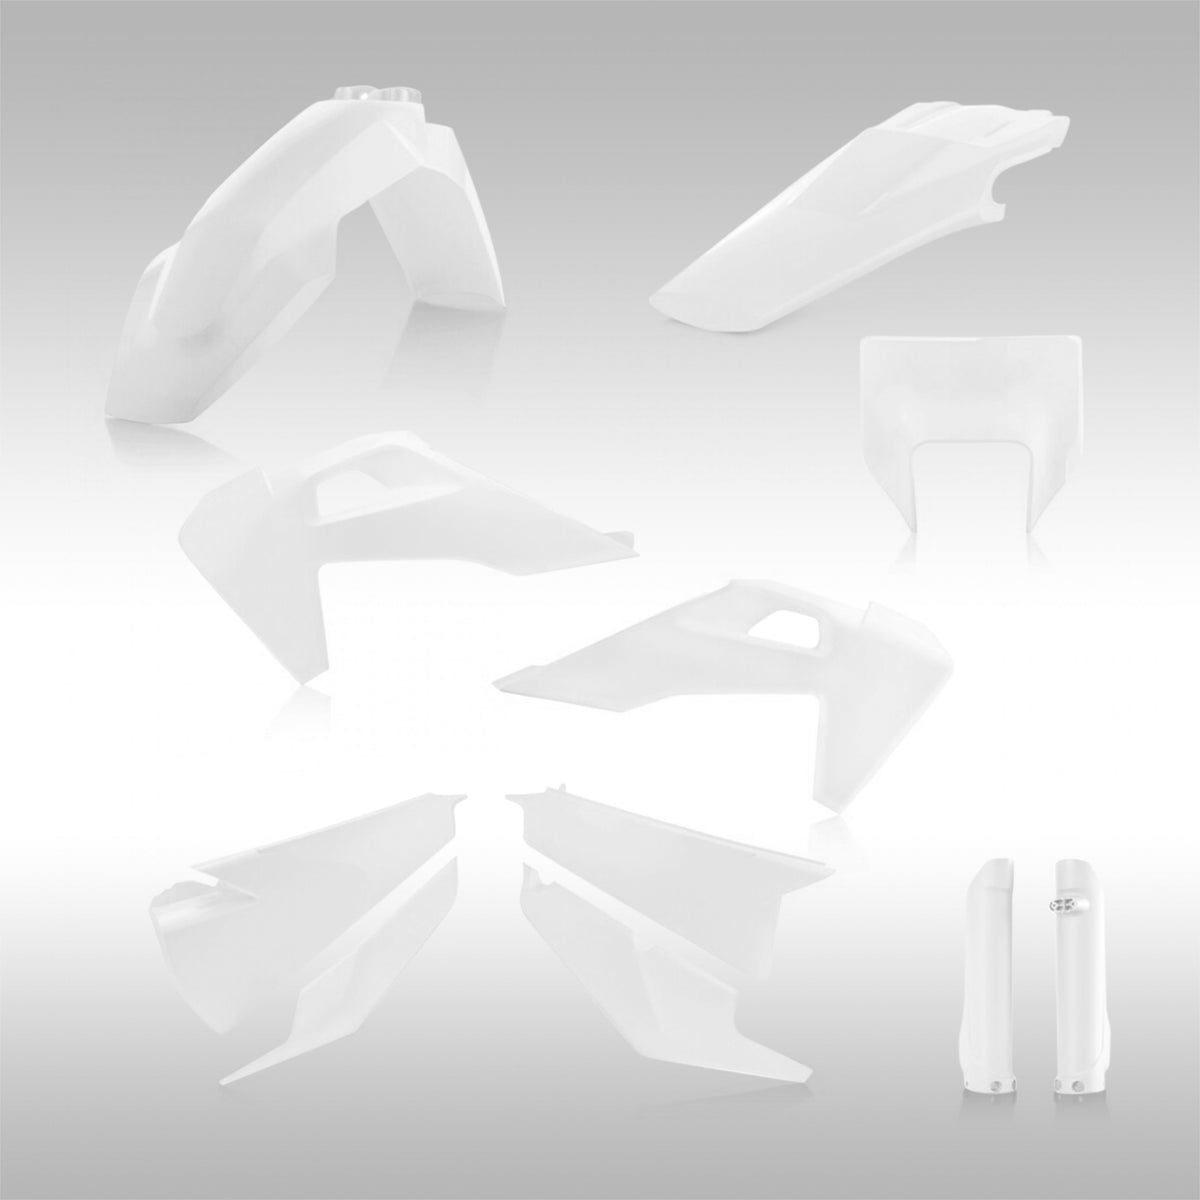 Acerbis plastic body work for 2020 - 2023 Husqvarna FE and Husqvarna TE models. Husqvarna dualsport and offroad body kits. Plastics for your Husqvarna dirt bike, enduro, dualsport. All white plastics for Husqvarna.